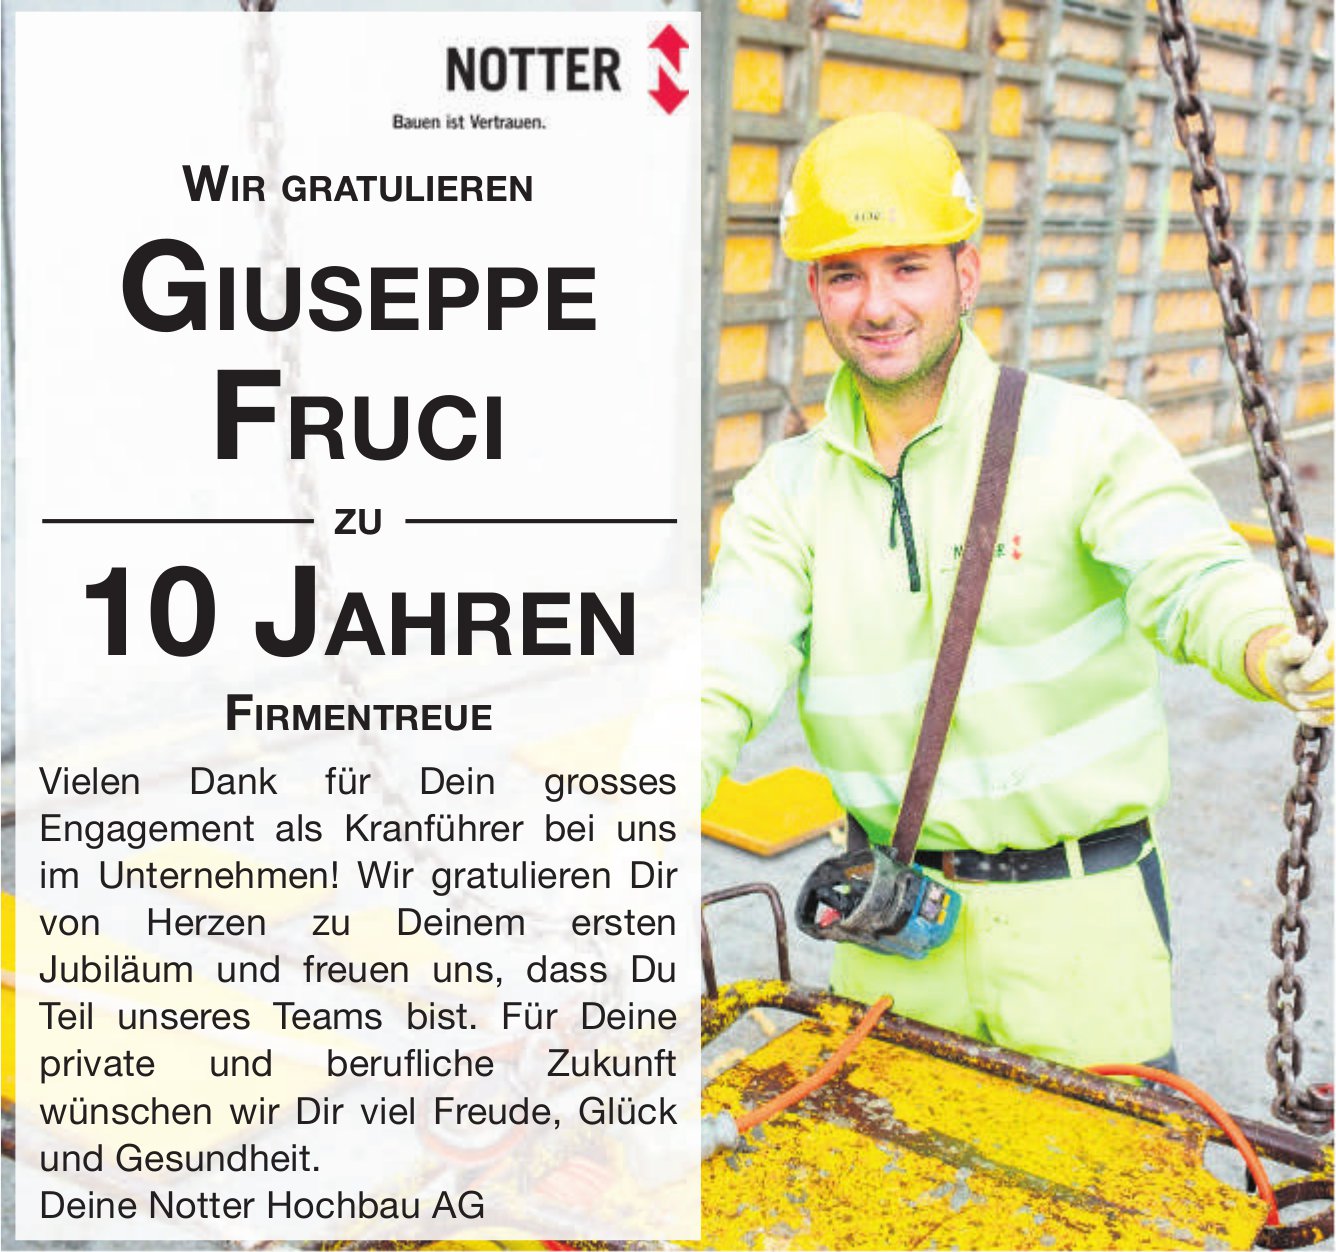 Notter Hochbau AG, Giuseppe Fruci, 10 Jahre Firmentreue